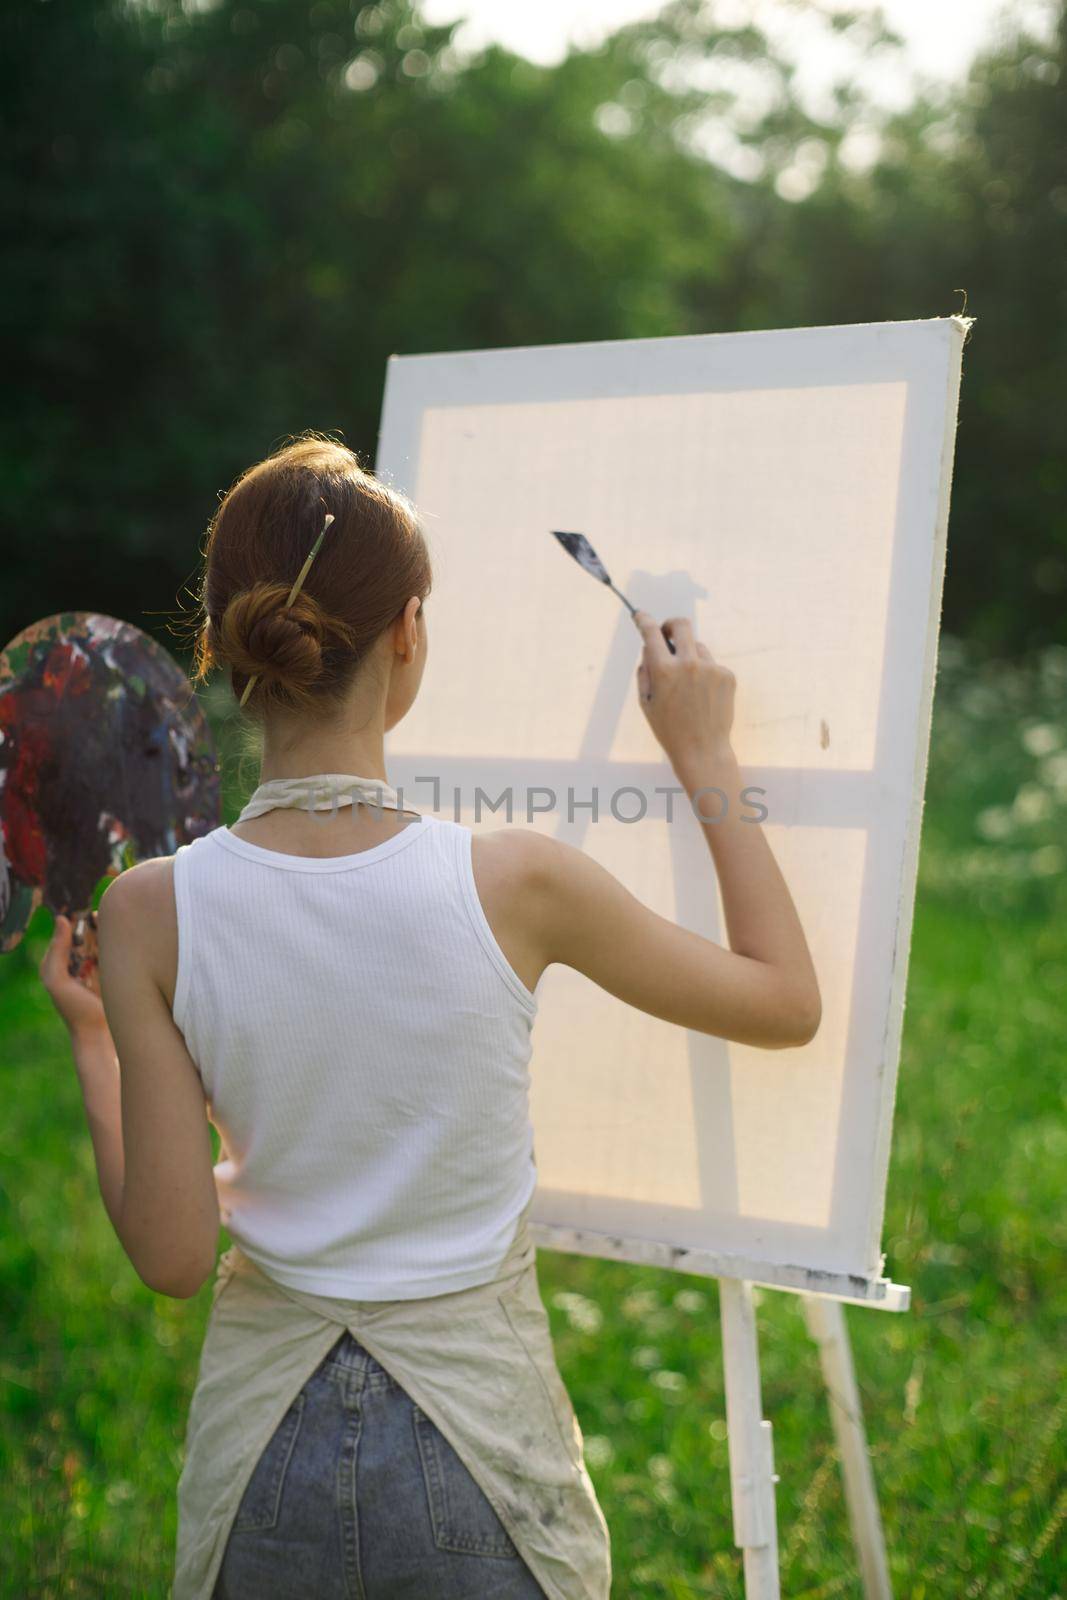 woman artist outdoors paint palette painting landscape. High quality photo